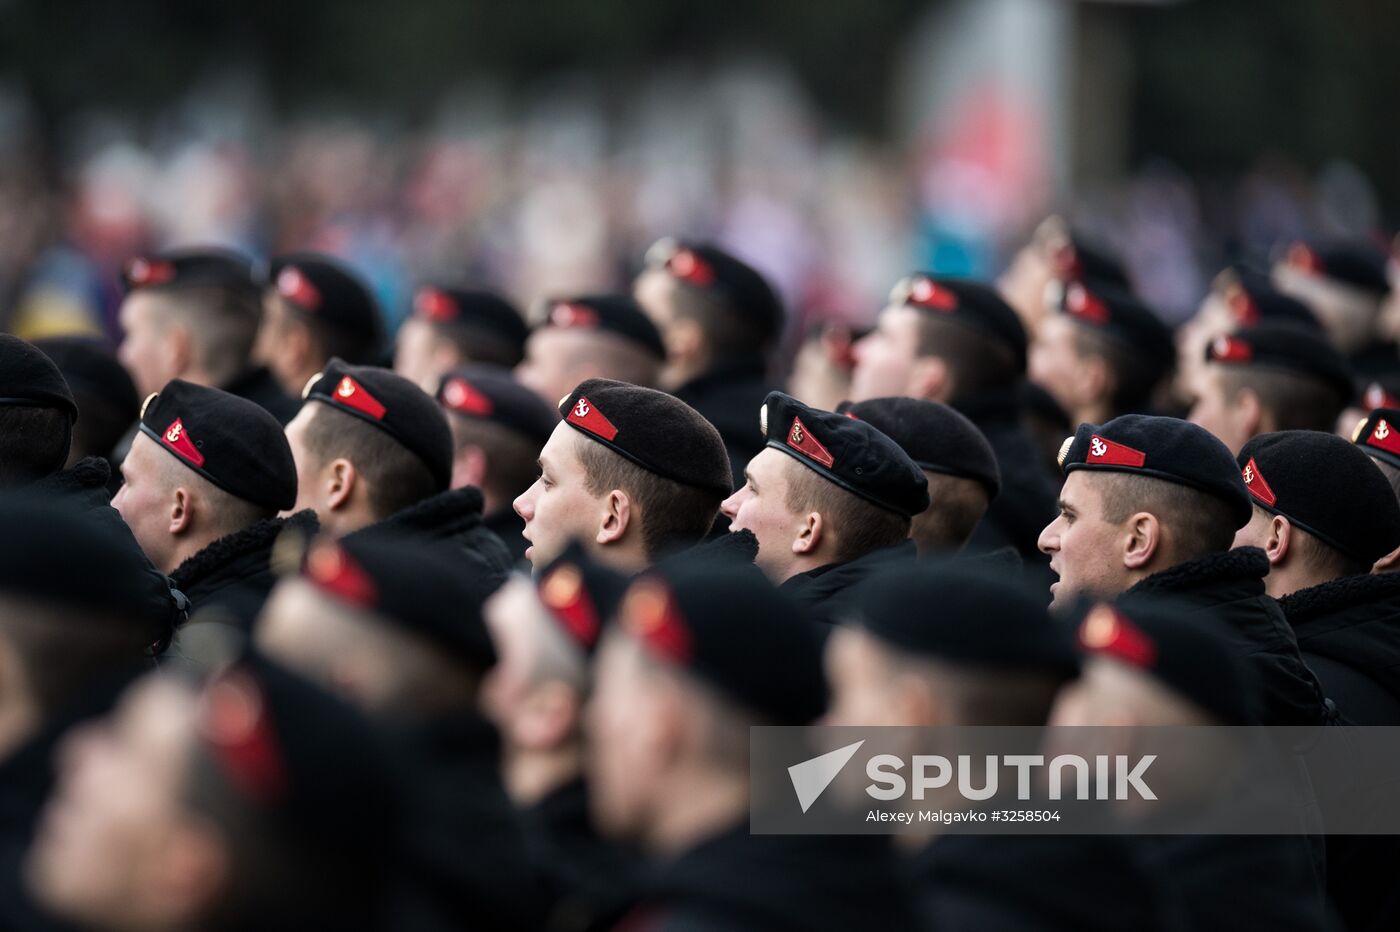 Fiftieth anniversary of the Black Sea Fleet's detached marine brigade